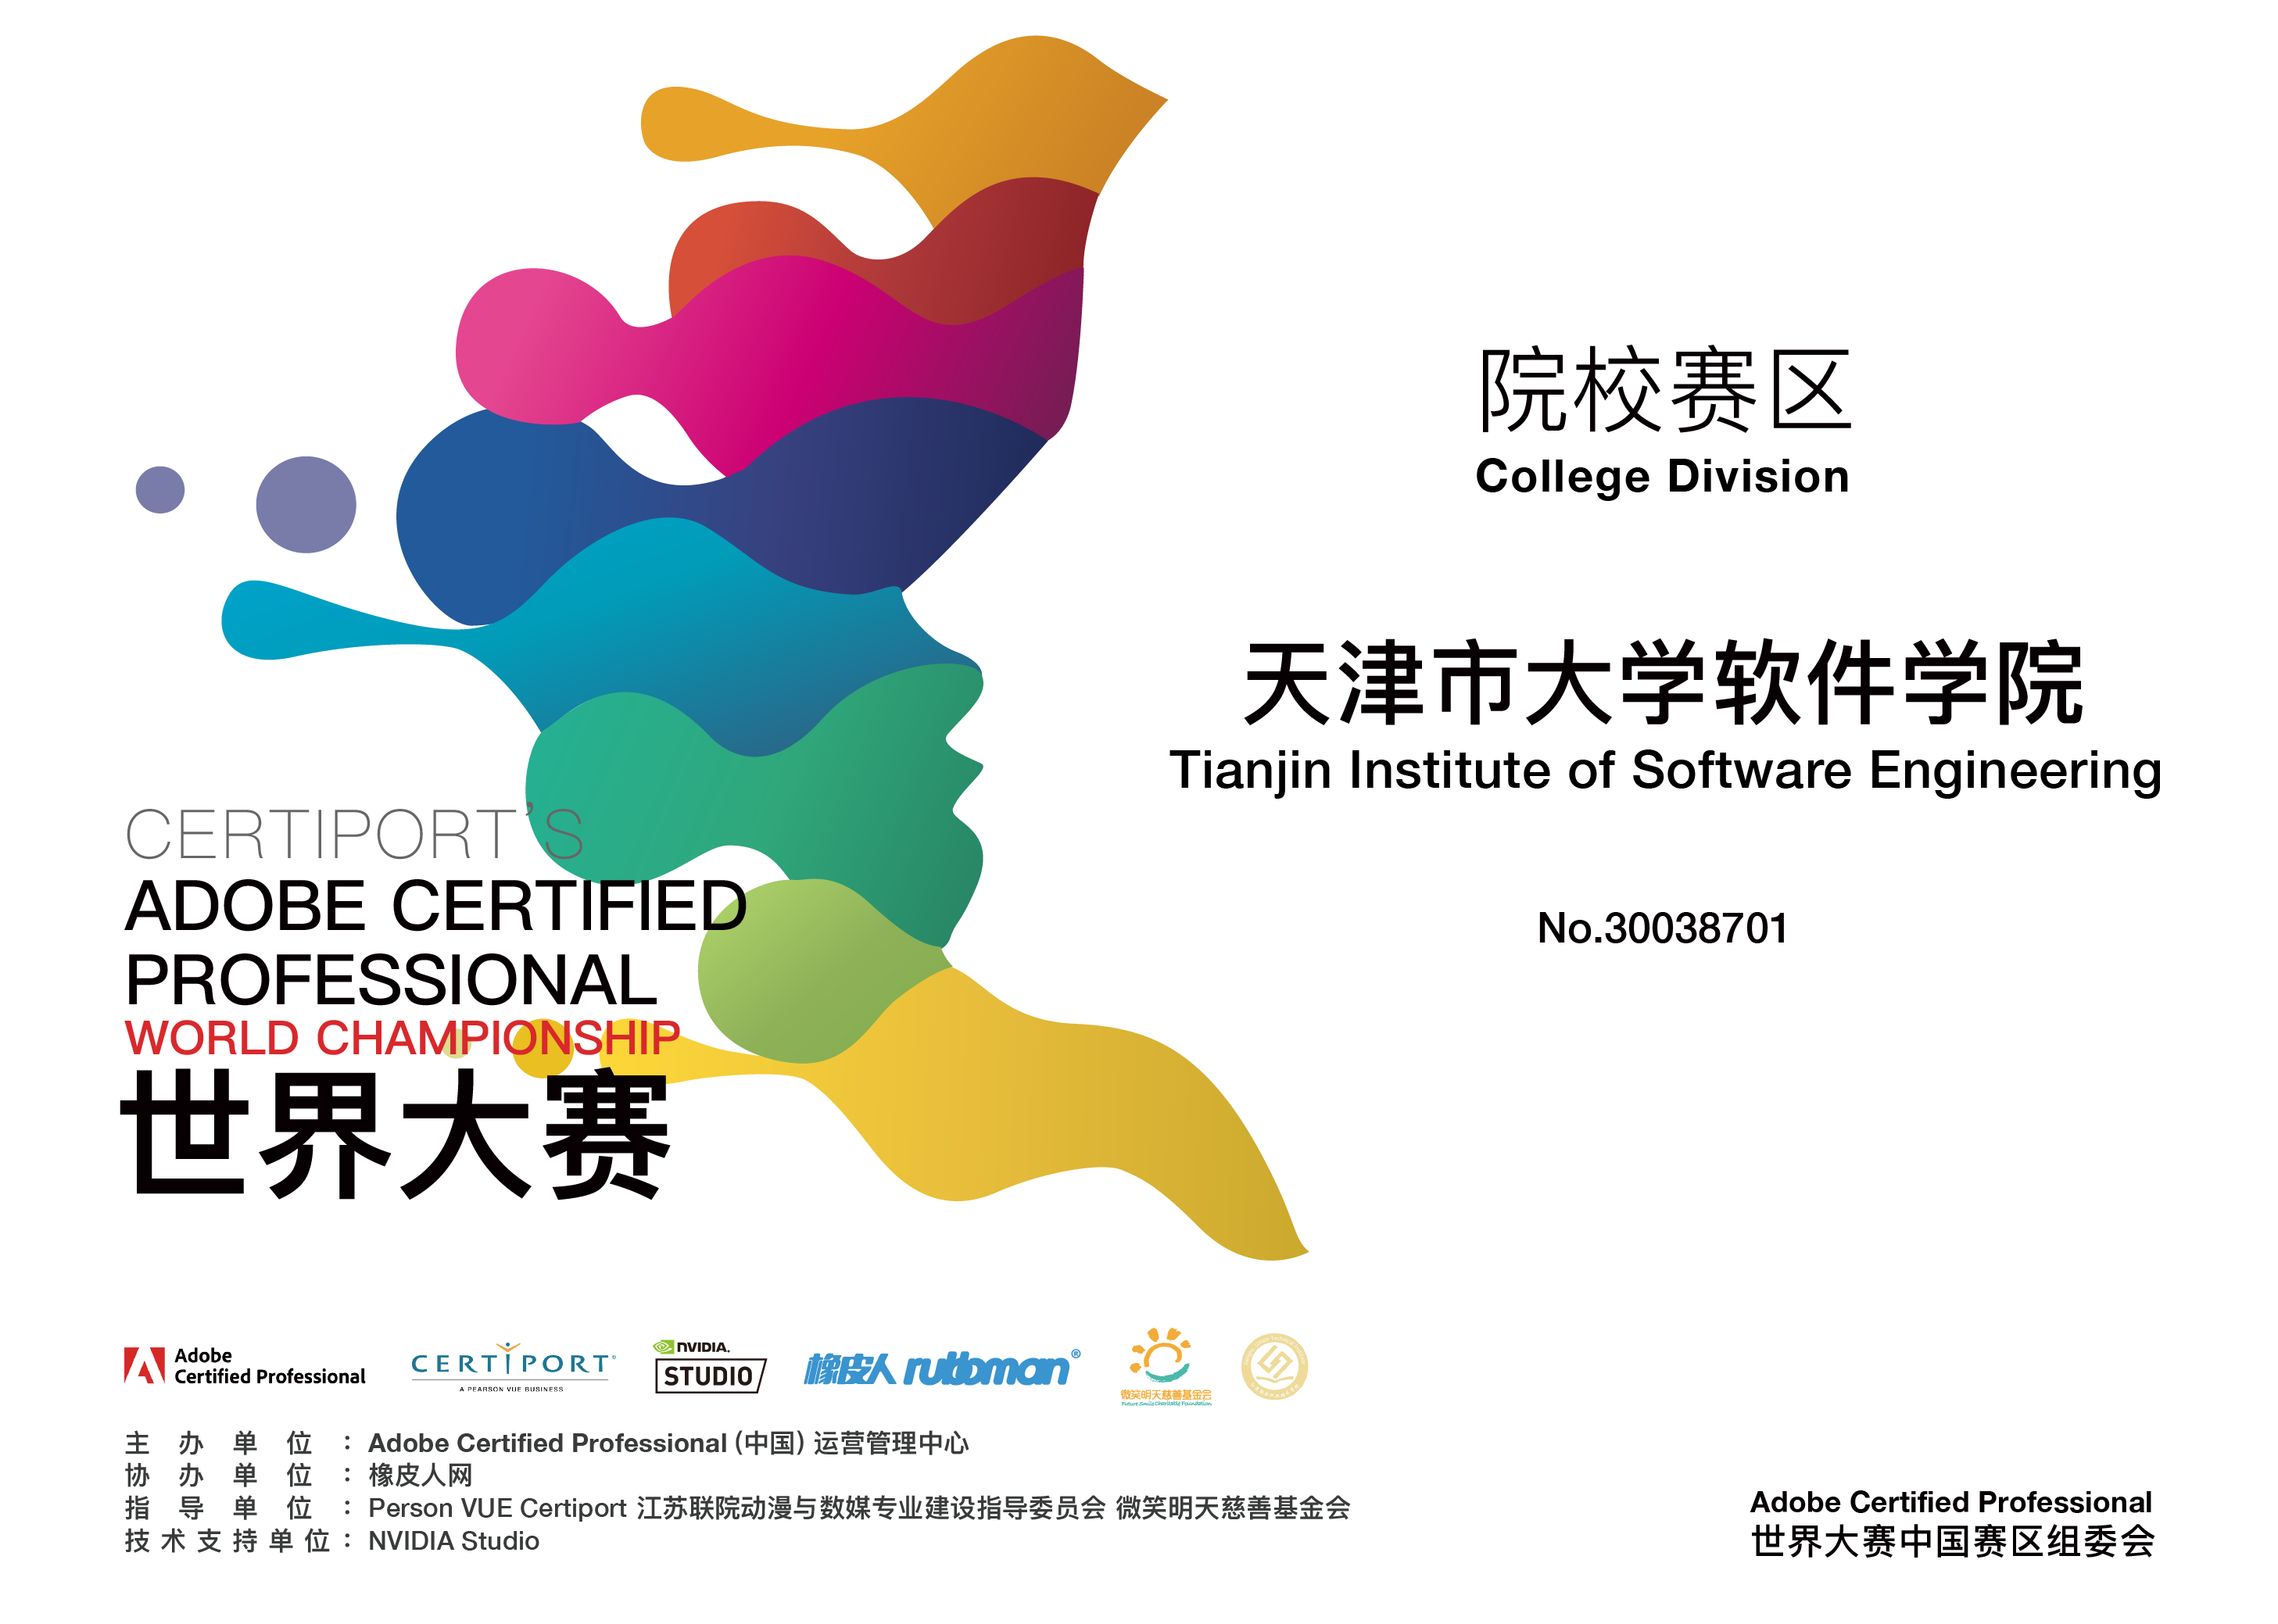 PPT - 山东海天软件工程专修学院 PowerPoint Presentation, free download - ID:5422264